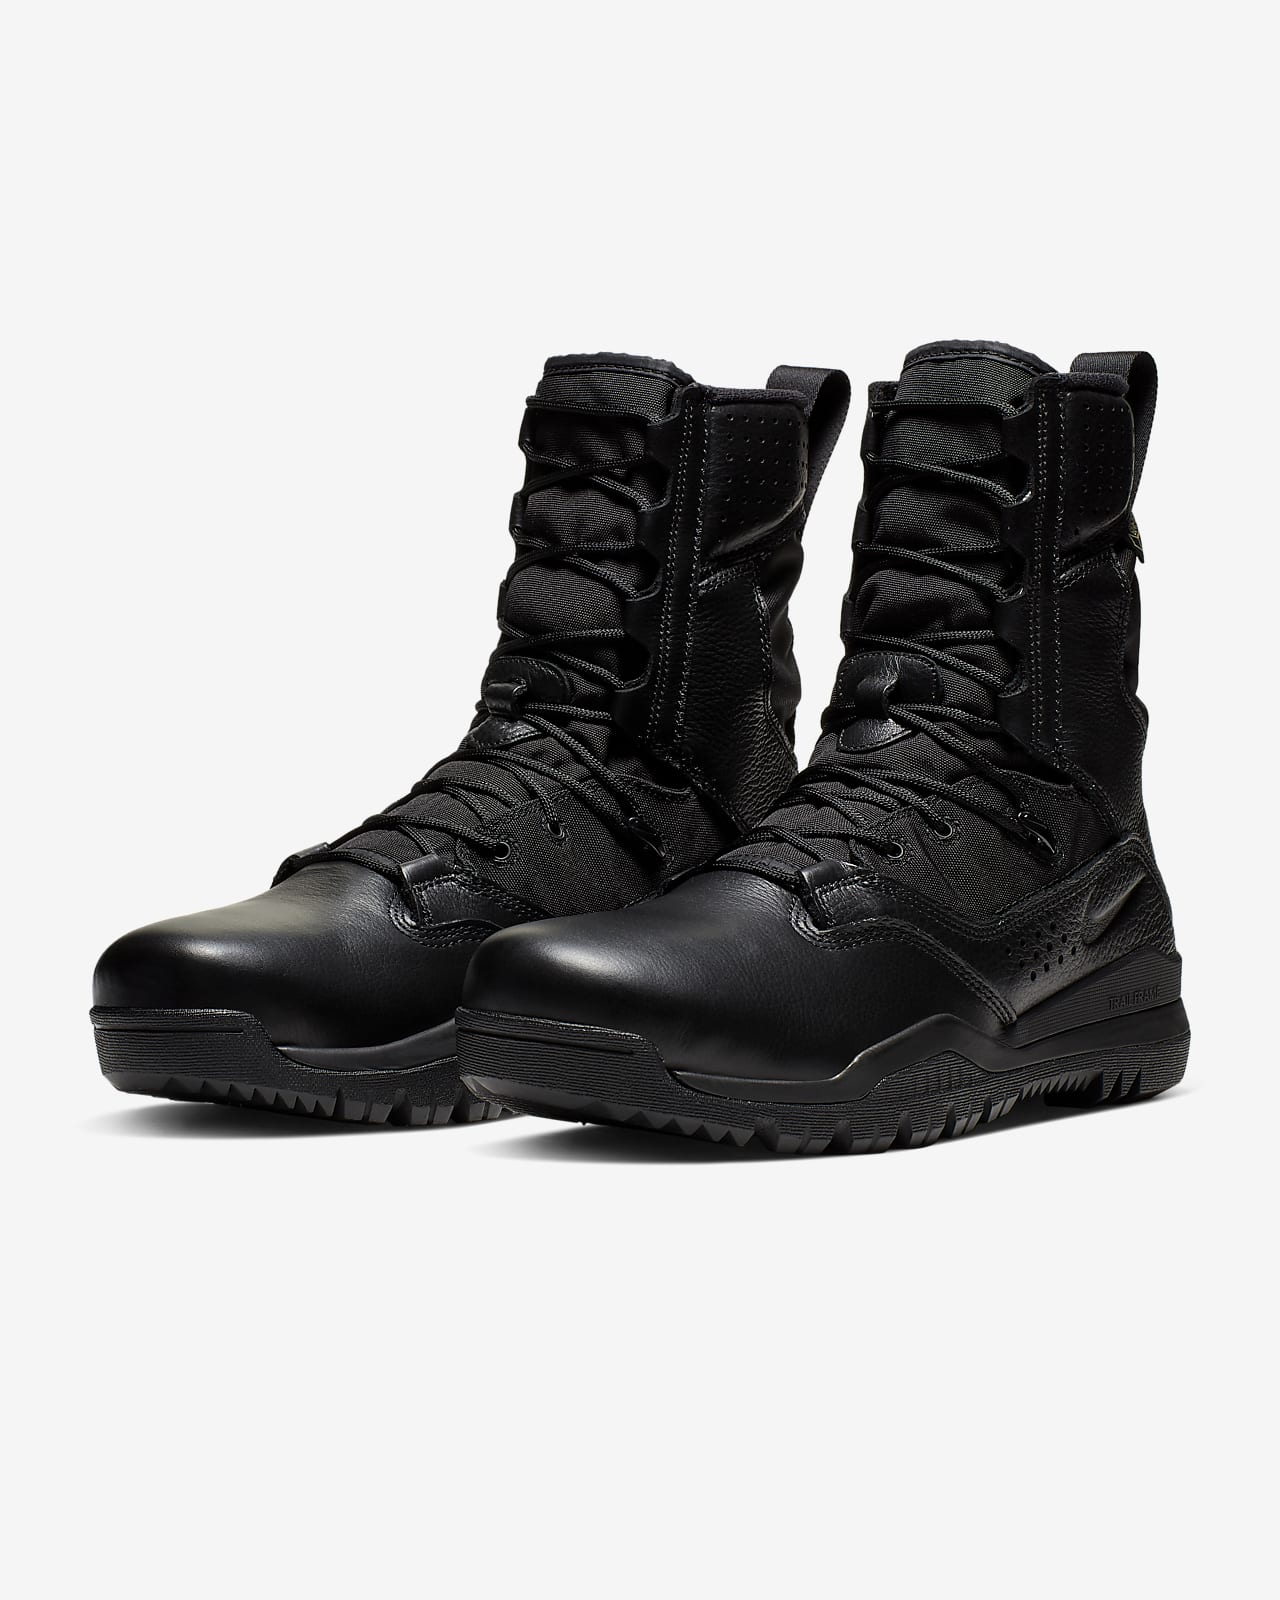 nike men's combat boots